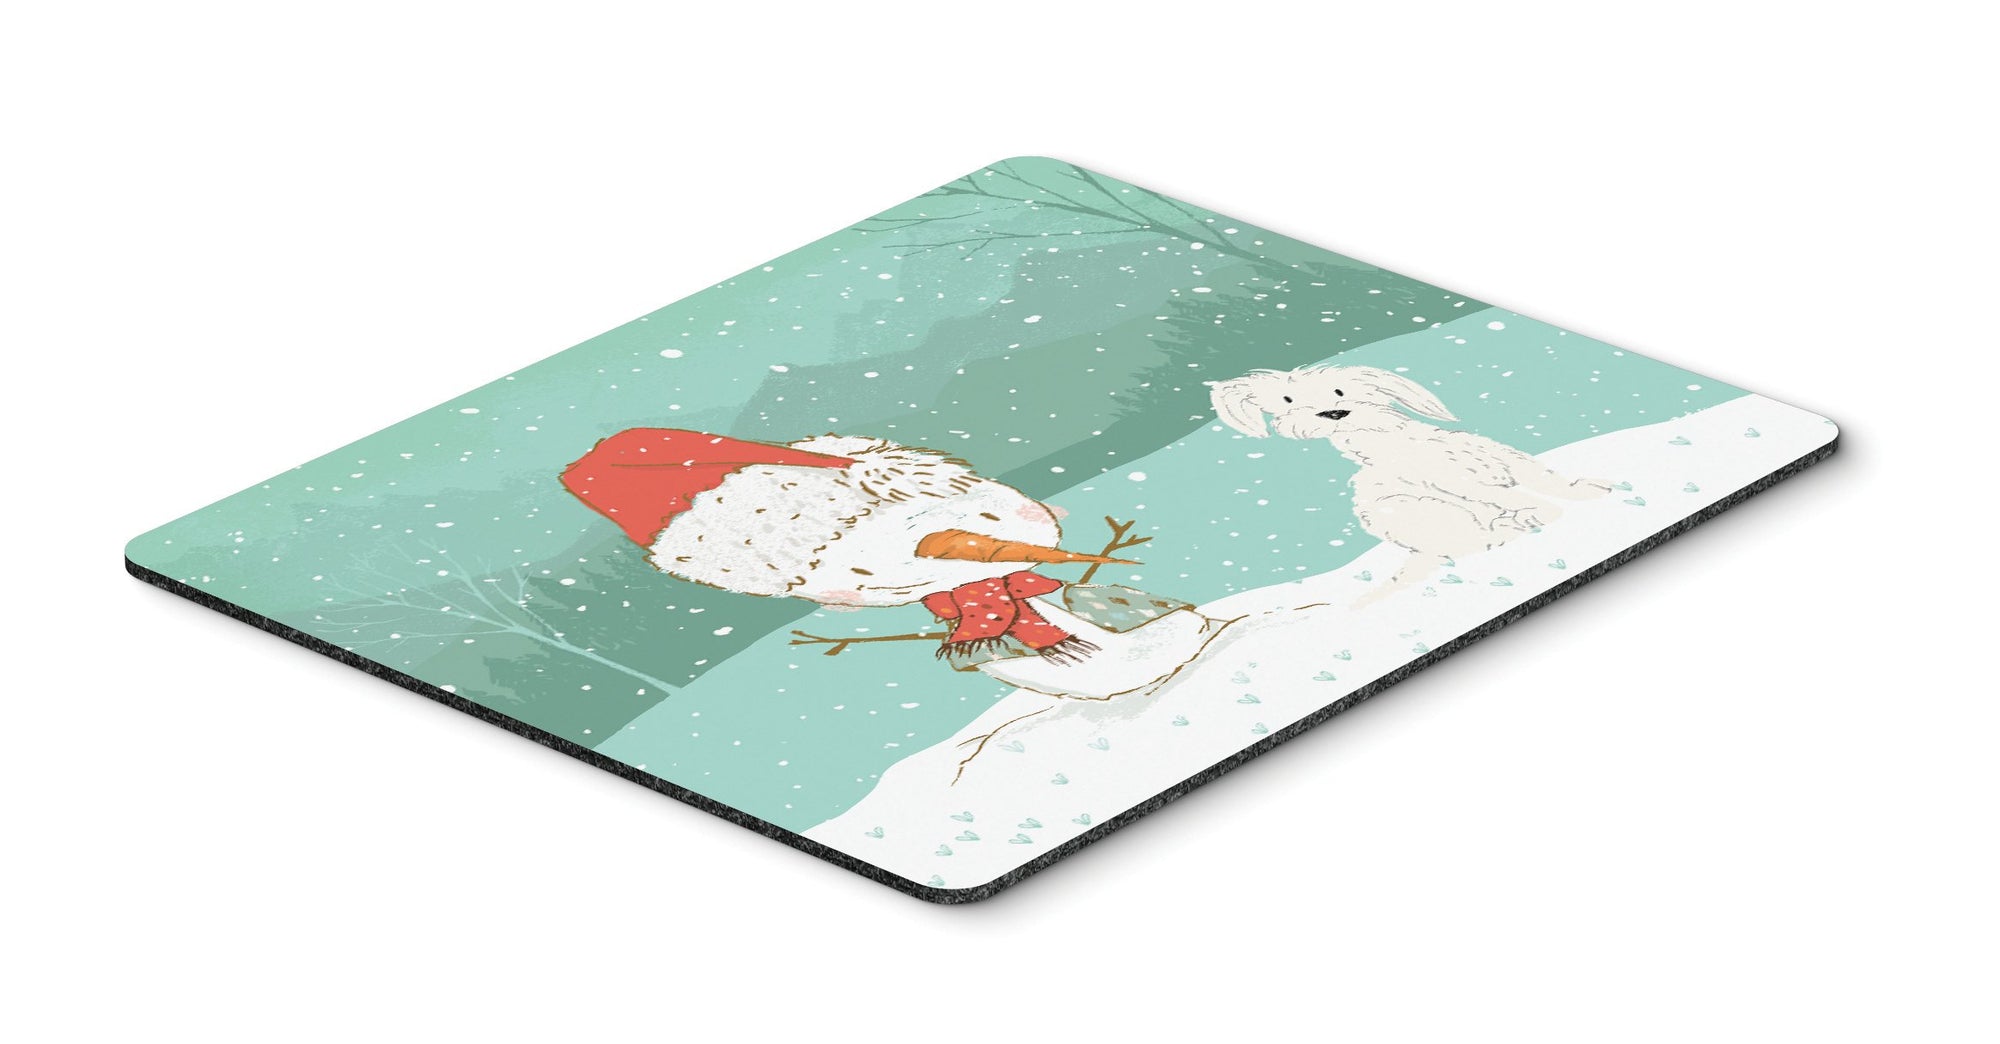 Maltese Snowman Christmas Mouse Pad, Hot Pad or Trivet CK2094MP by Caroline's Treasures